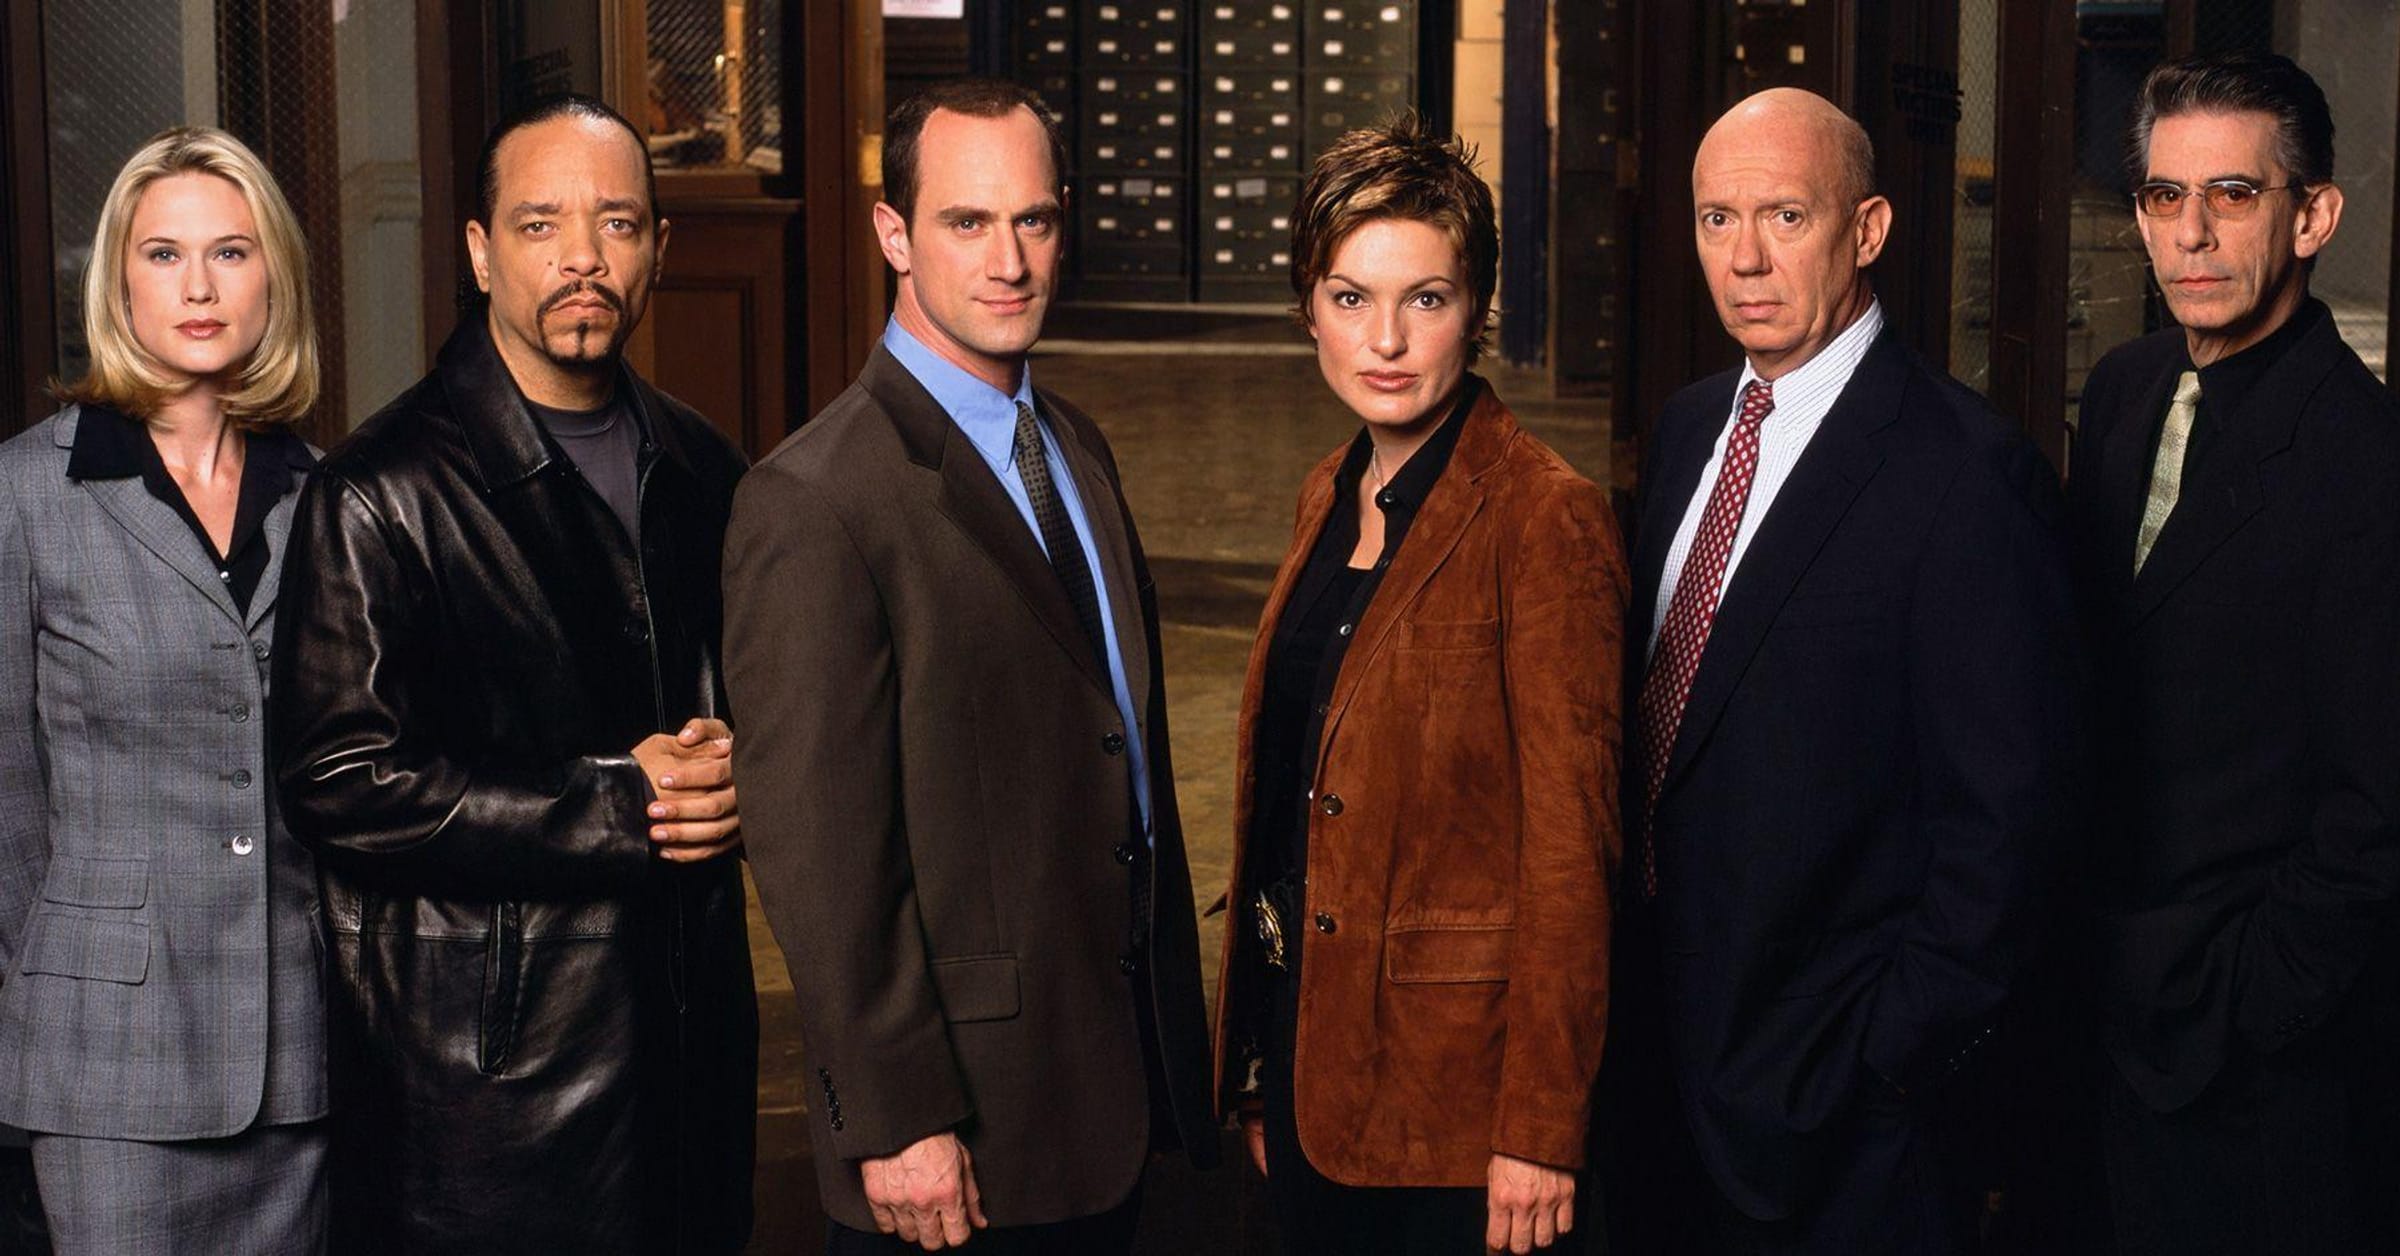 Law & Order: Special Victims Unit (TV Series 1999– ) - “Cast” credits - IMDb